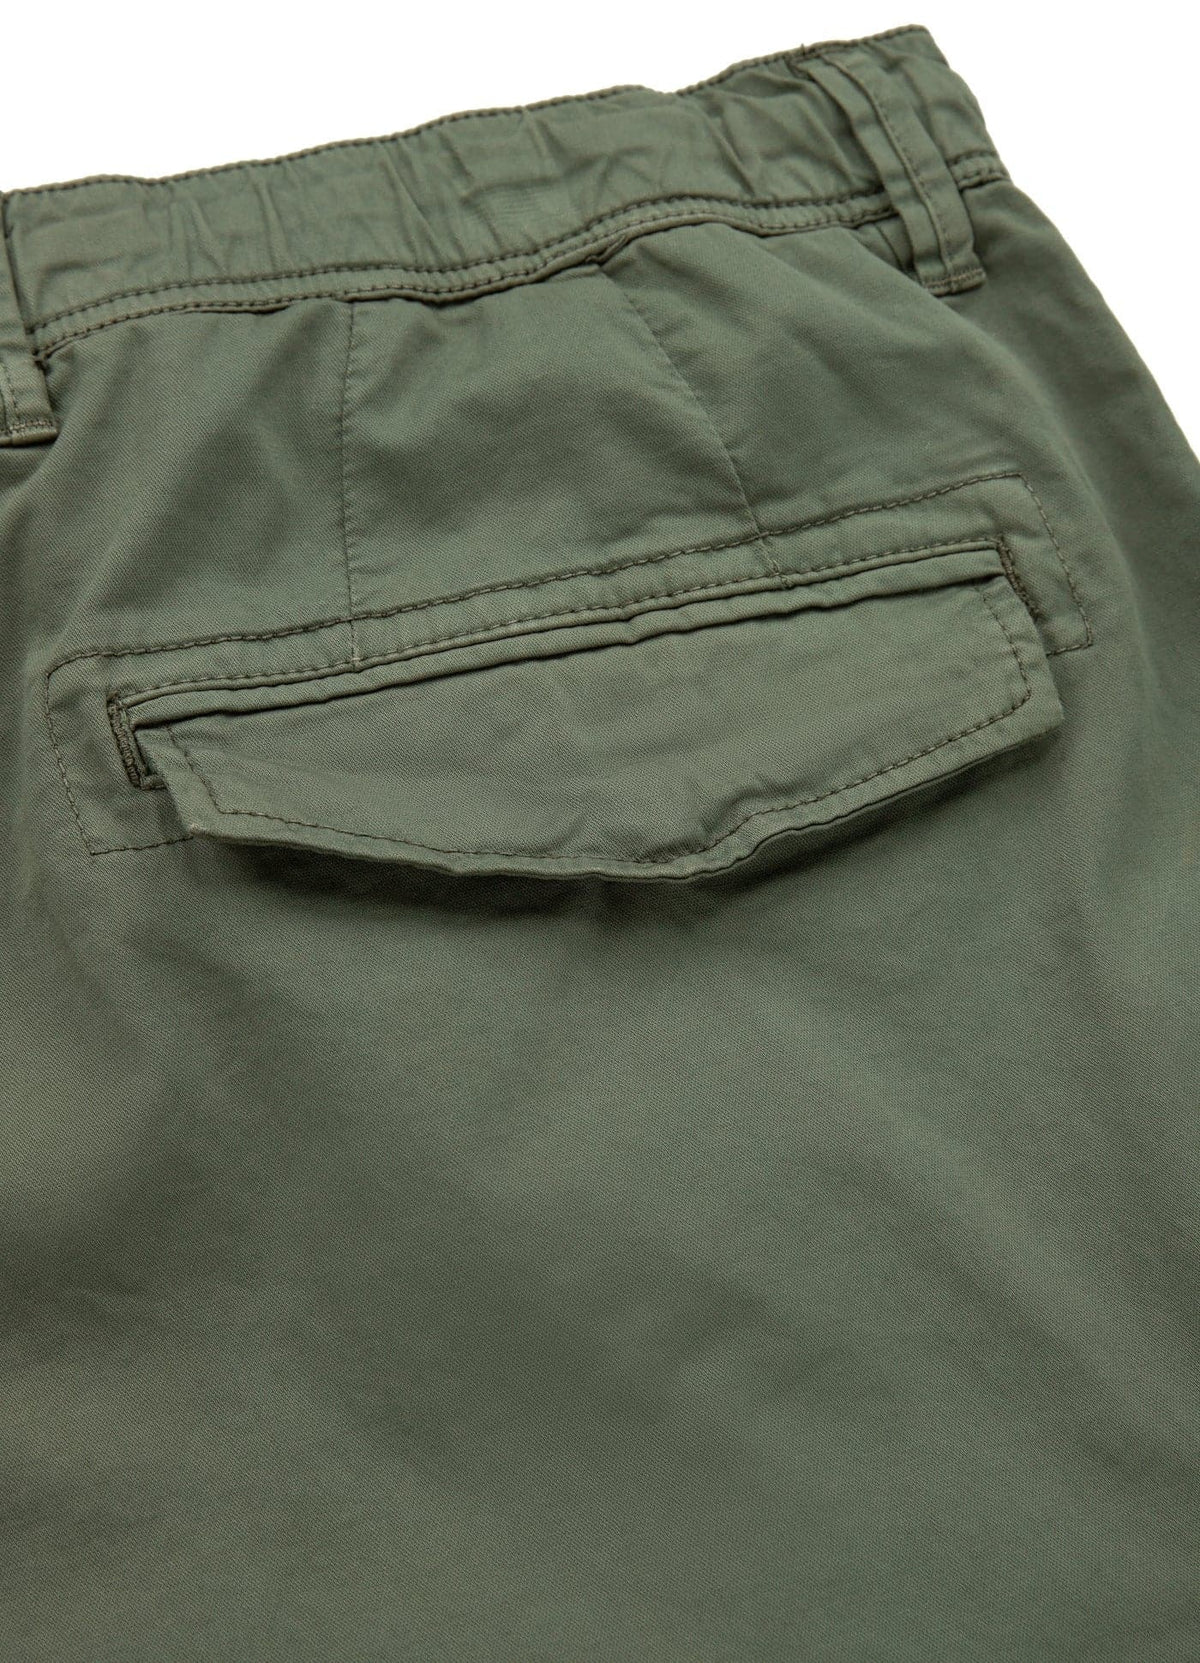 ARAGON Olive Cargo Shorts - Pitbullstore.eu